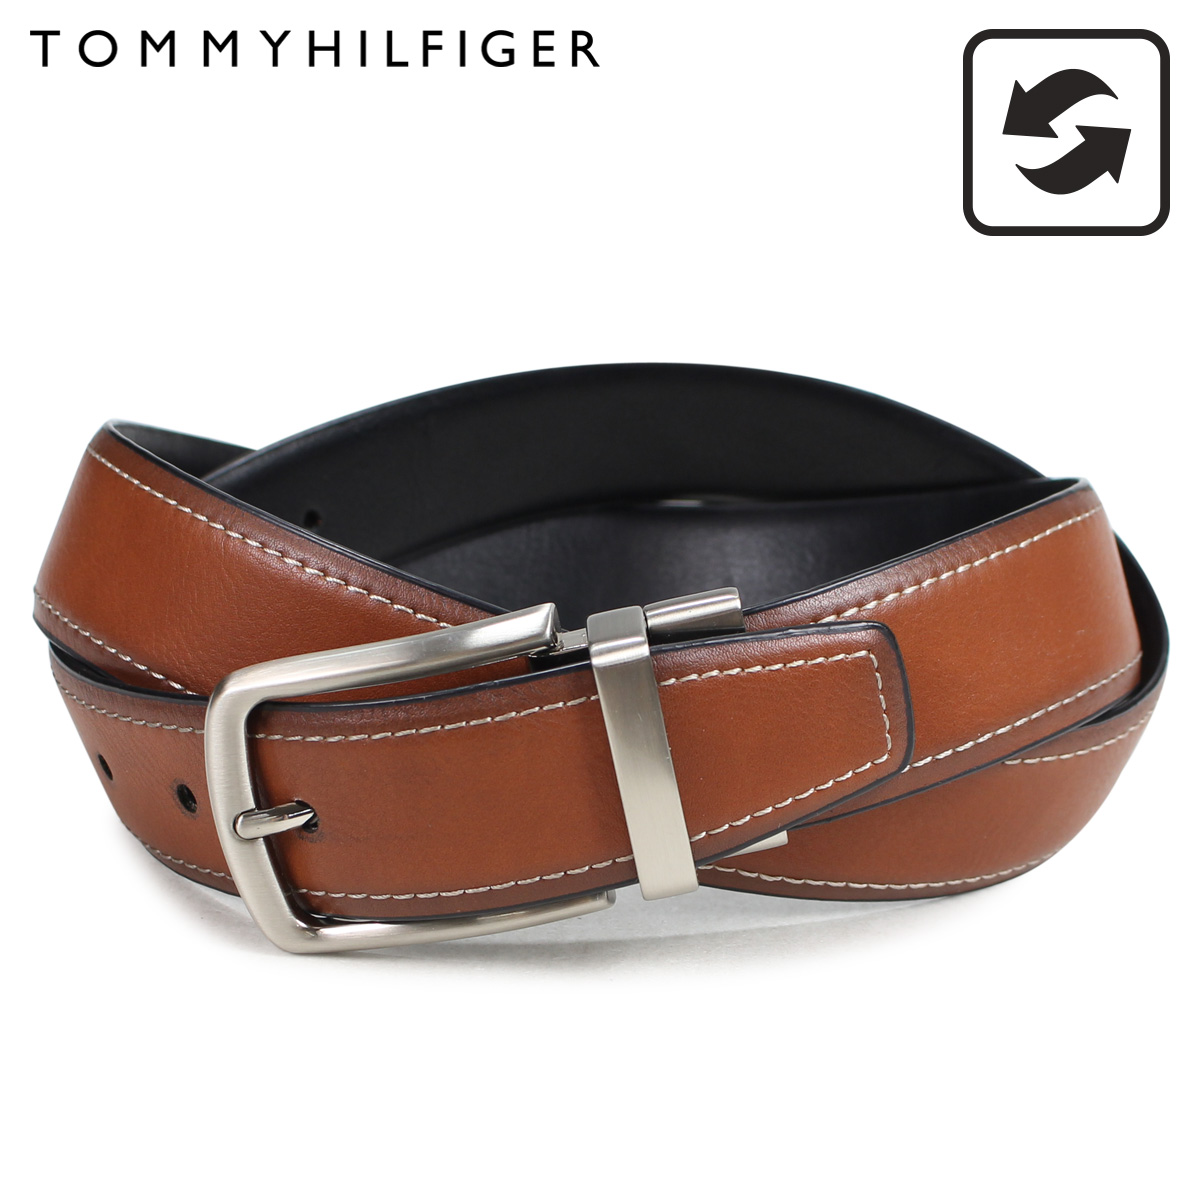 genuine leather tommy hilfiger